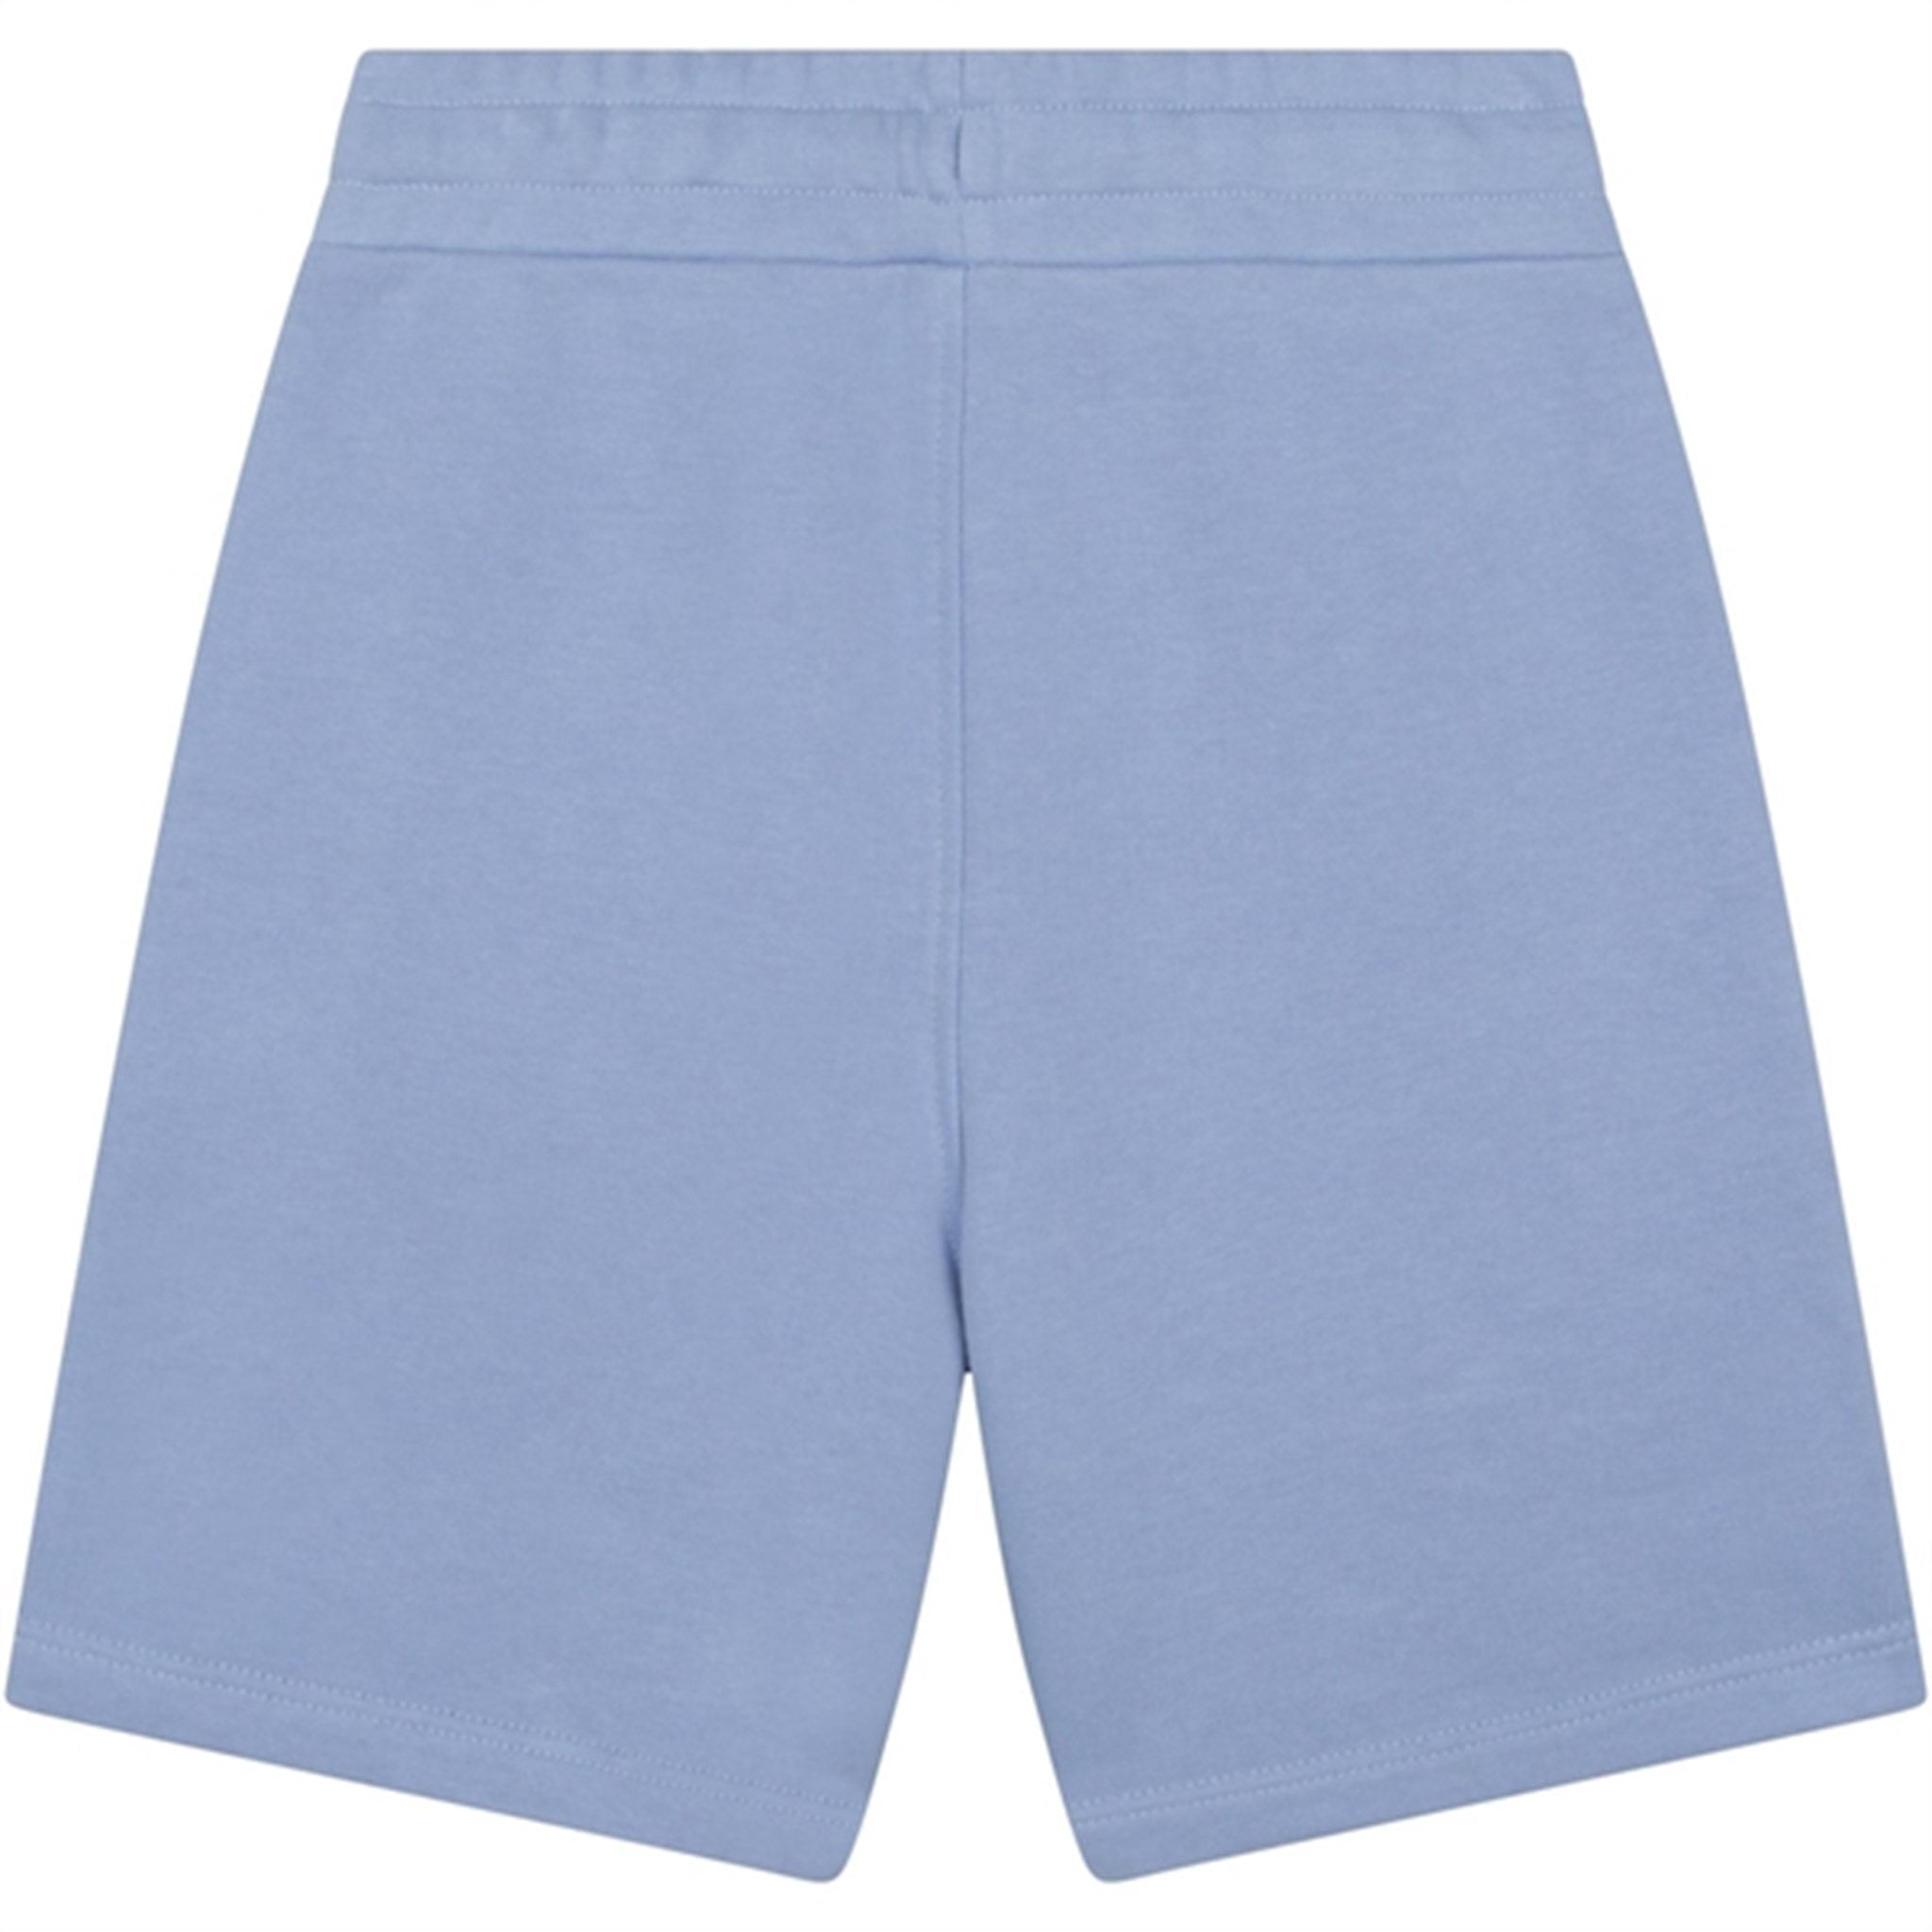 Hugo Boss Bermuda Shorts Pale Blue 2